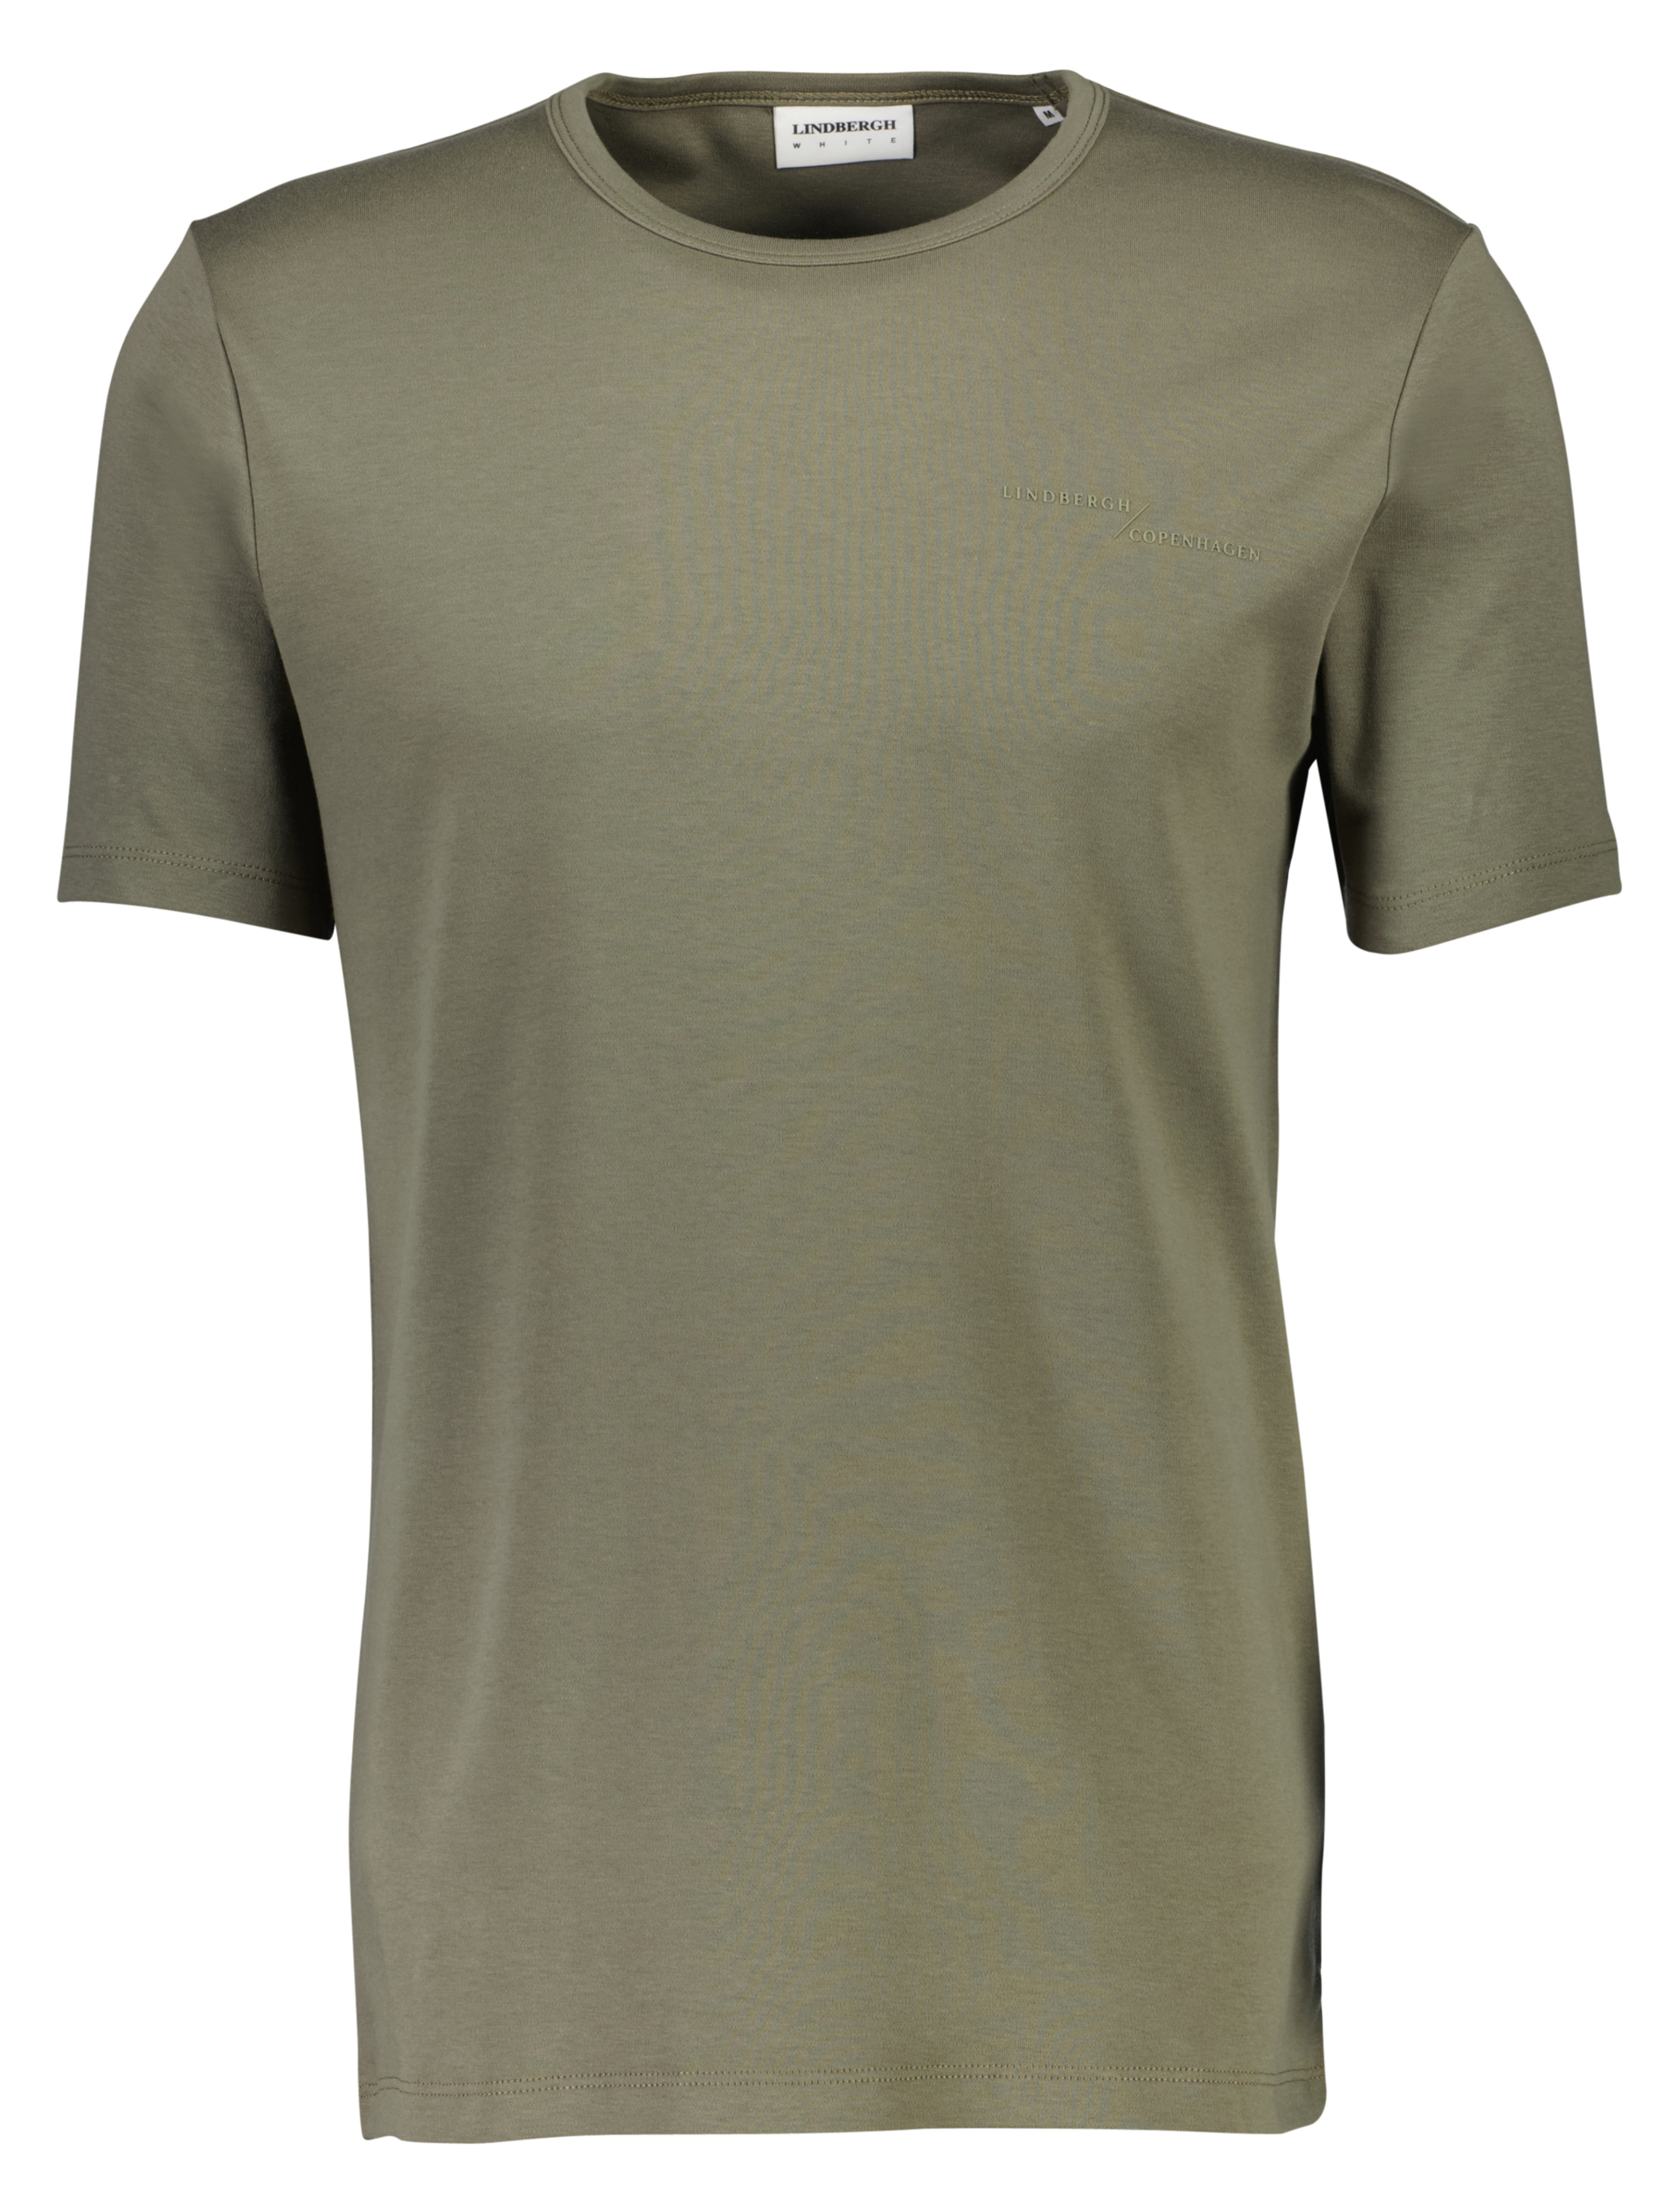 Lindbergh T-shirt groen / army